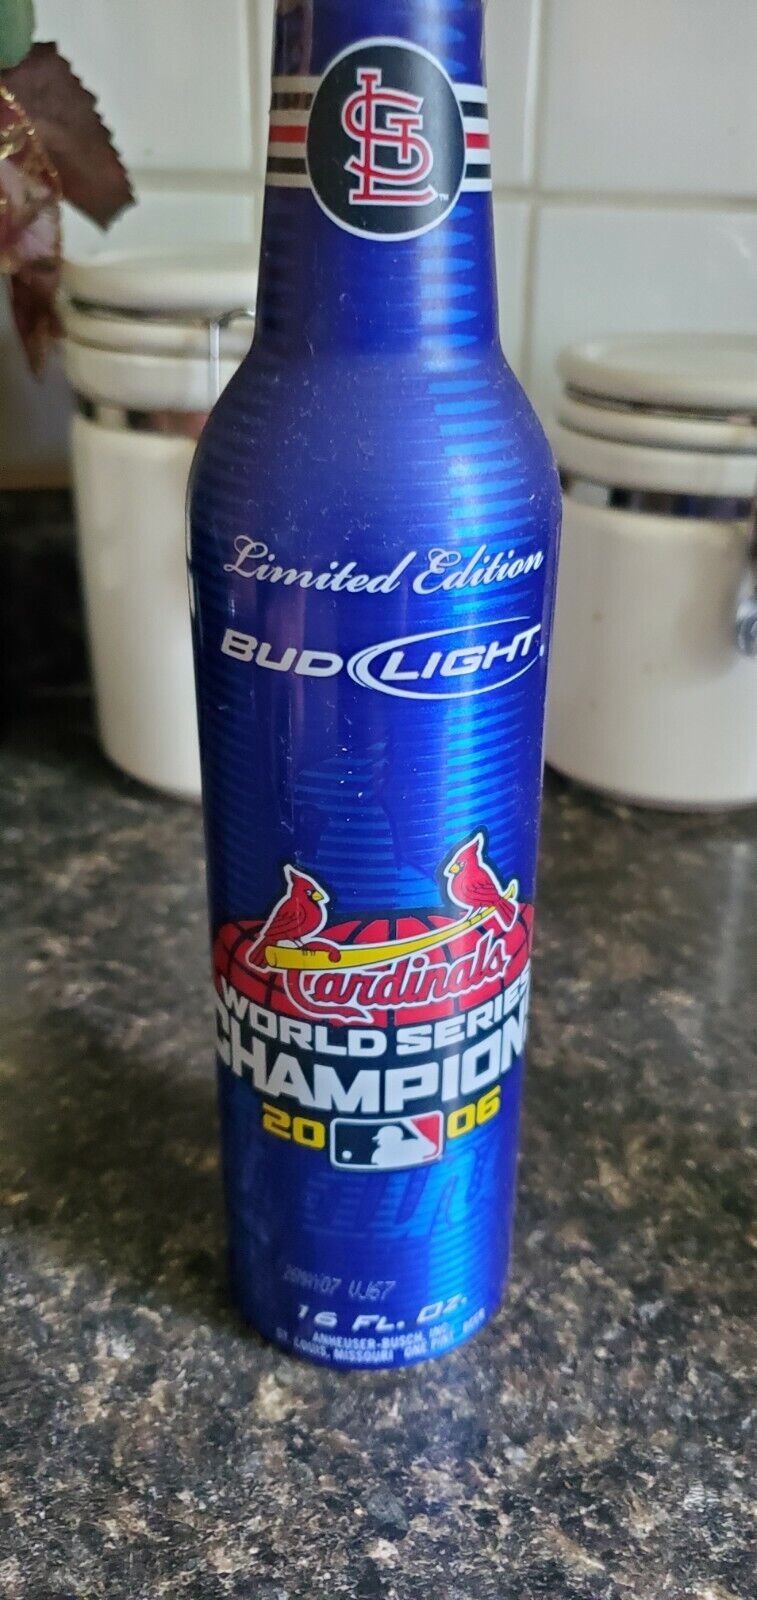 Limited Edition Cardinals World Series Bud Light Bottle